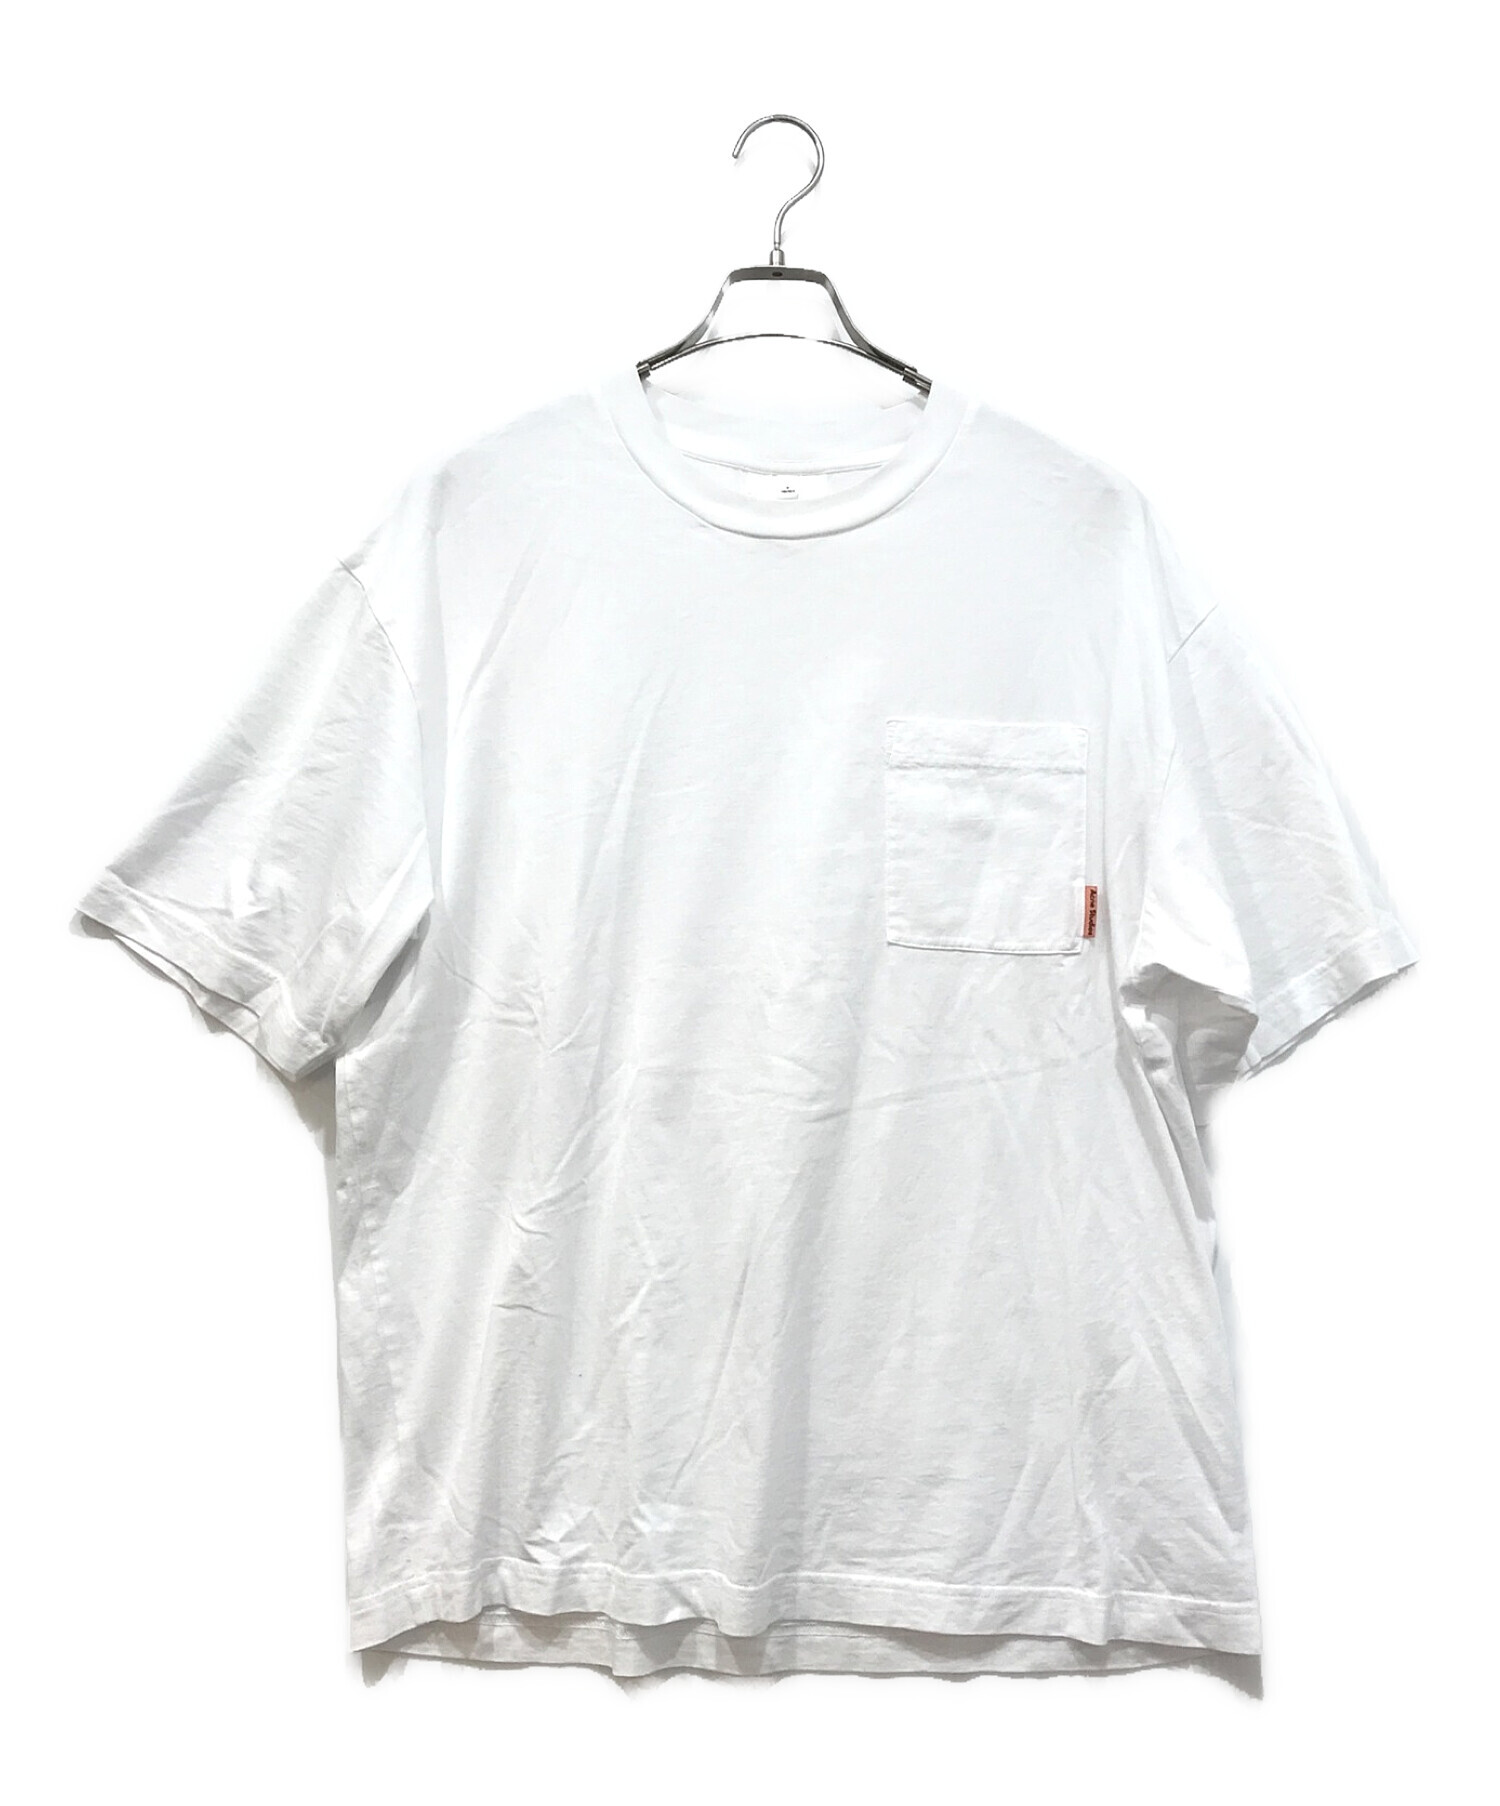 Acne studios (アクネストゥディオズ) コットンポケットTシャツ ホワイト サイズ:S